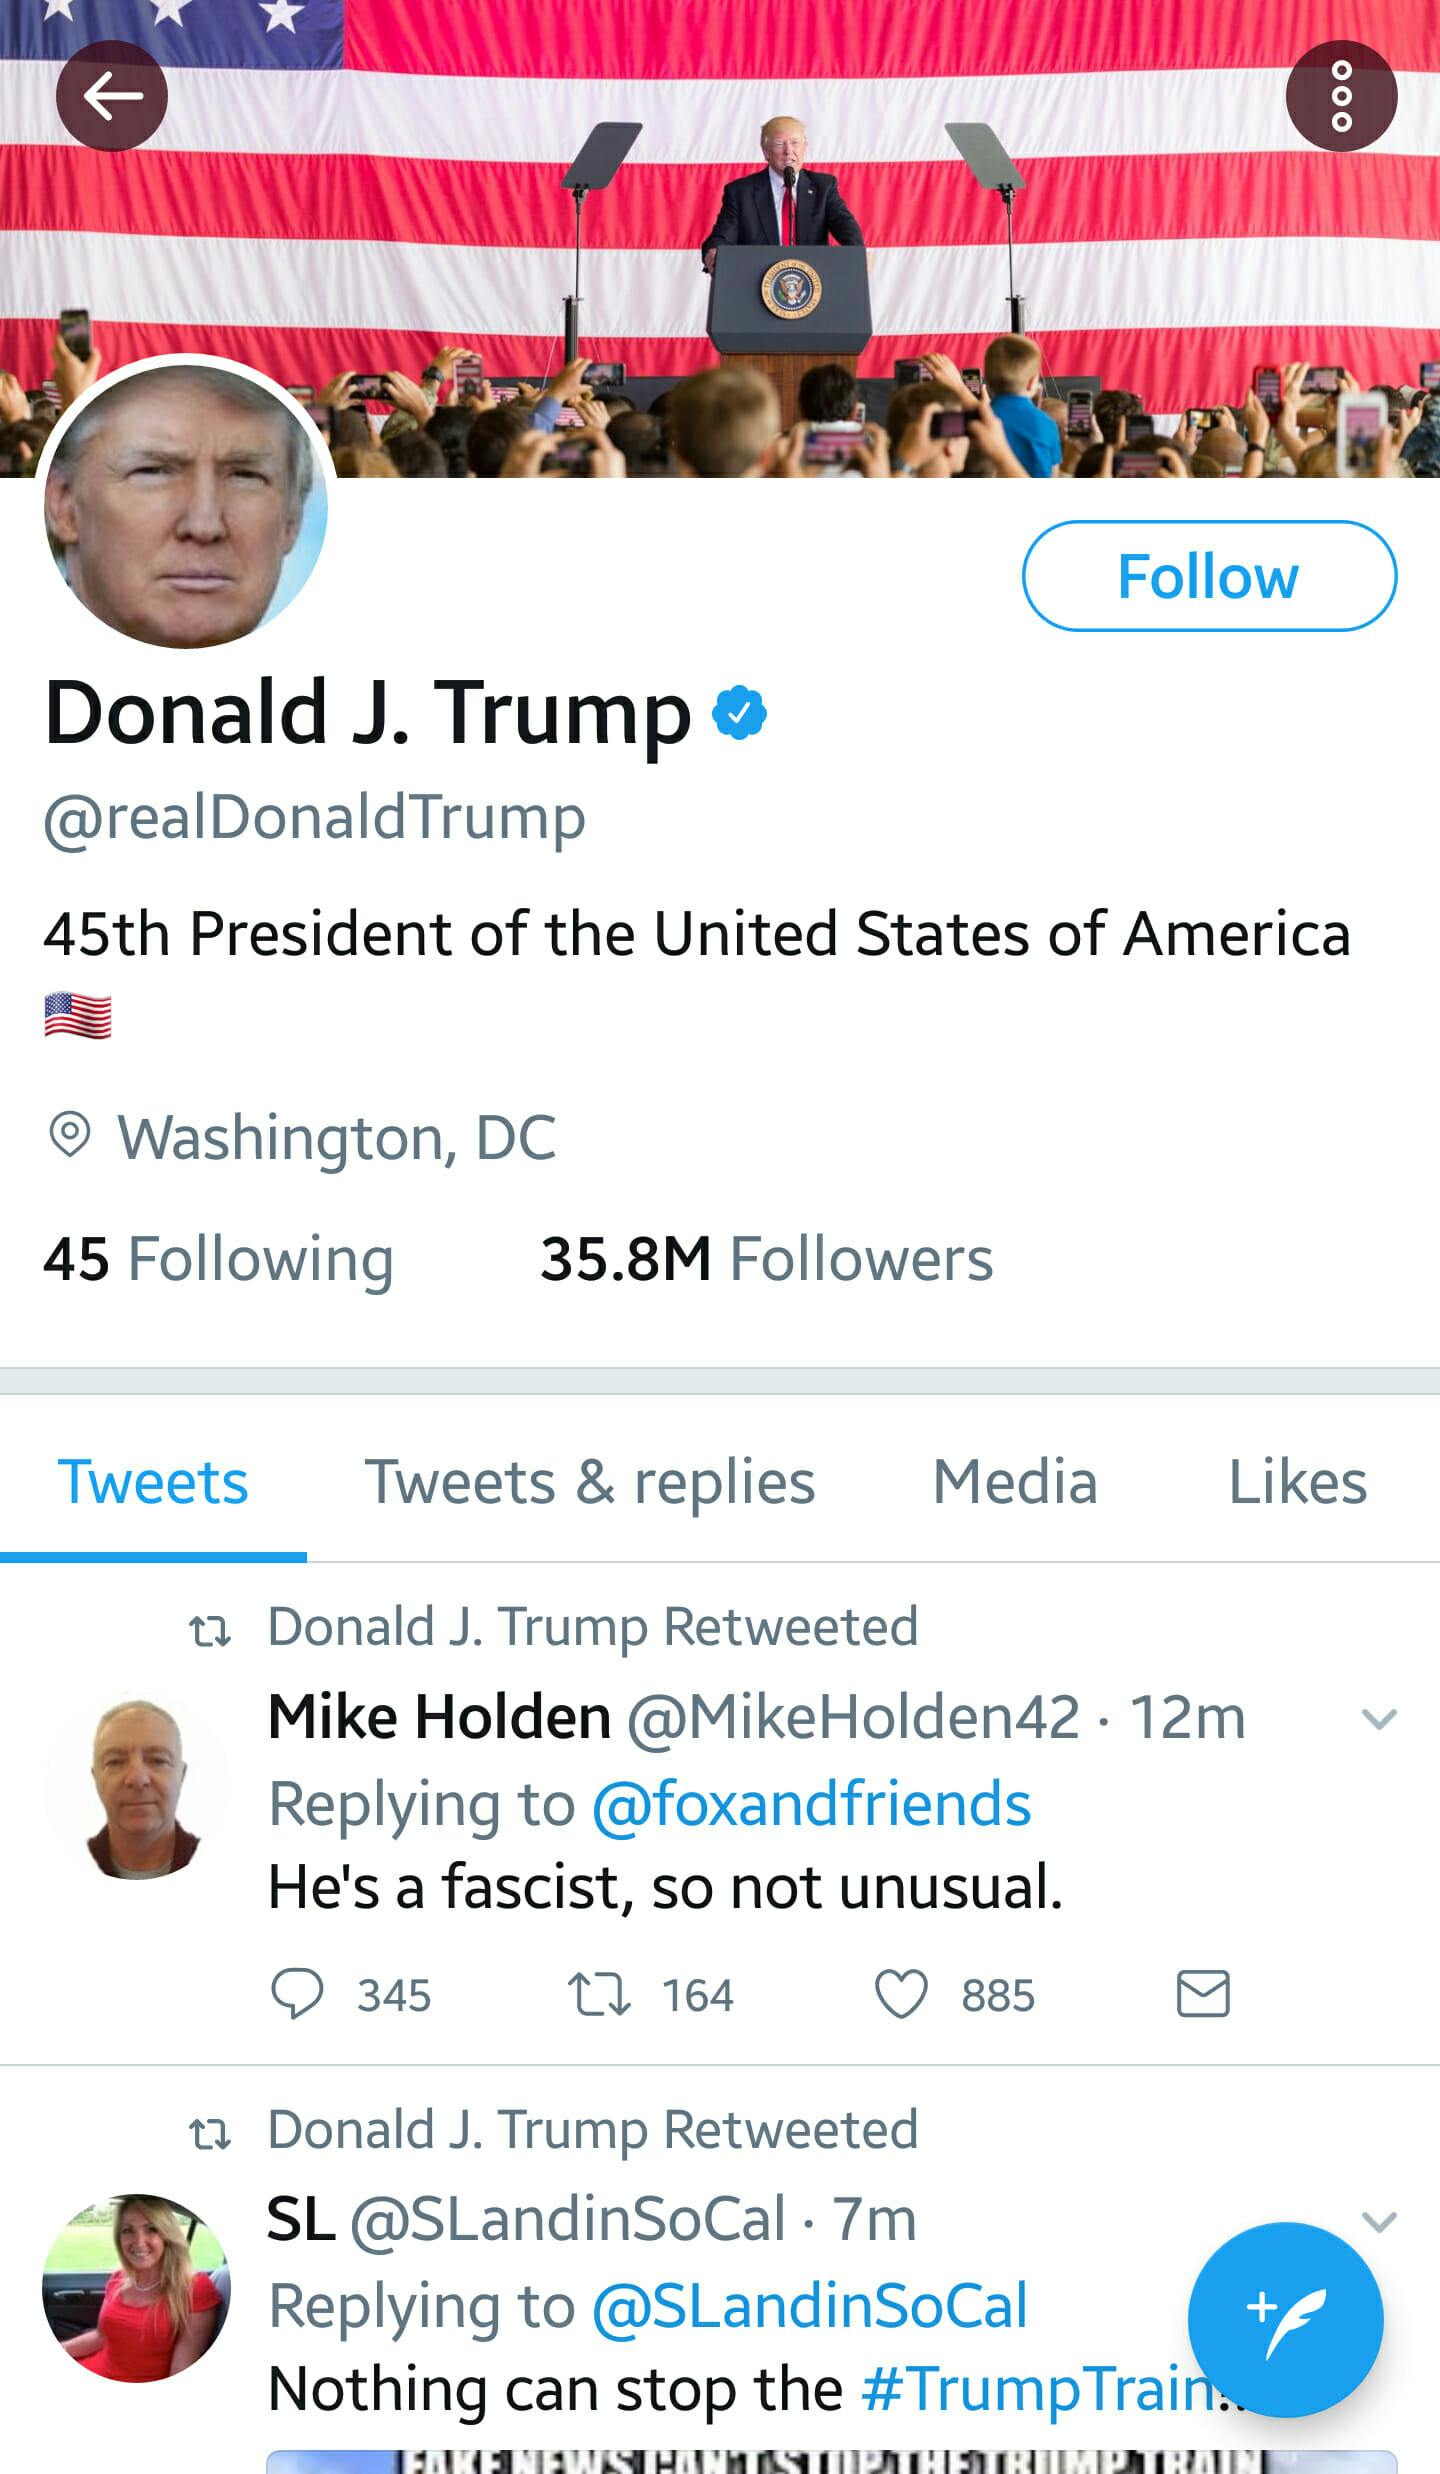 Donald Trump retweeted someone calling him a fascist.